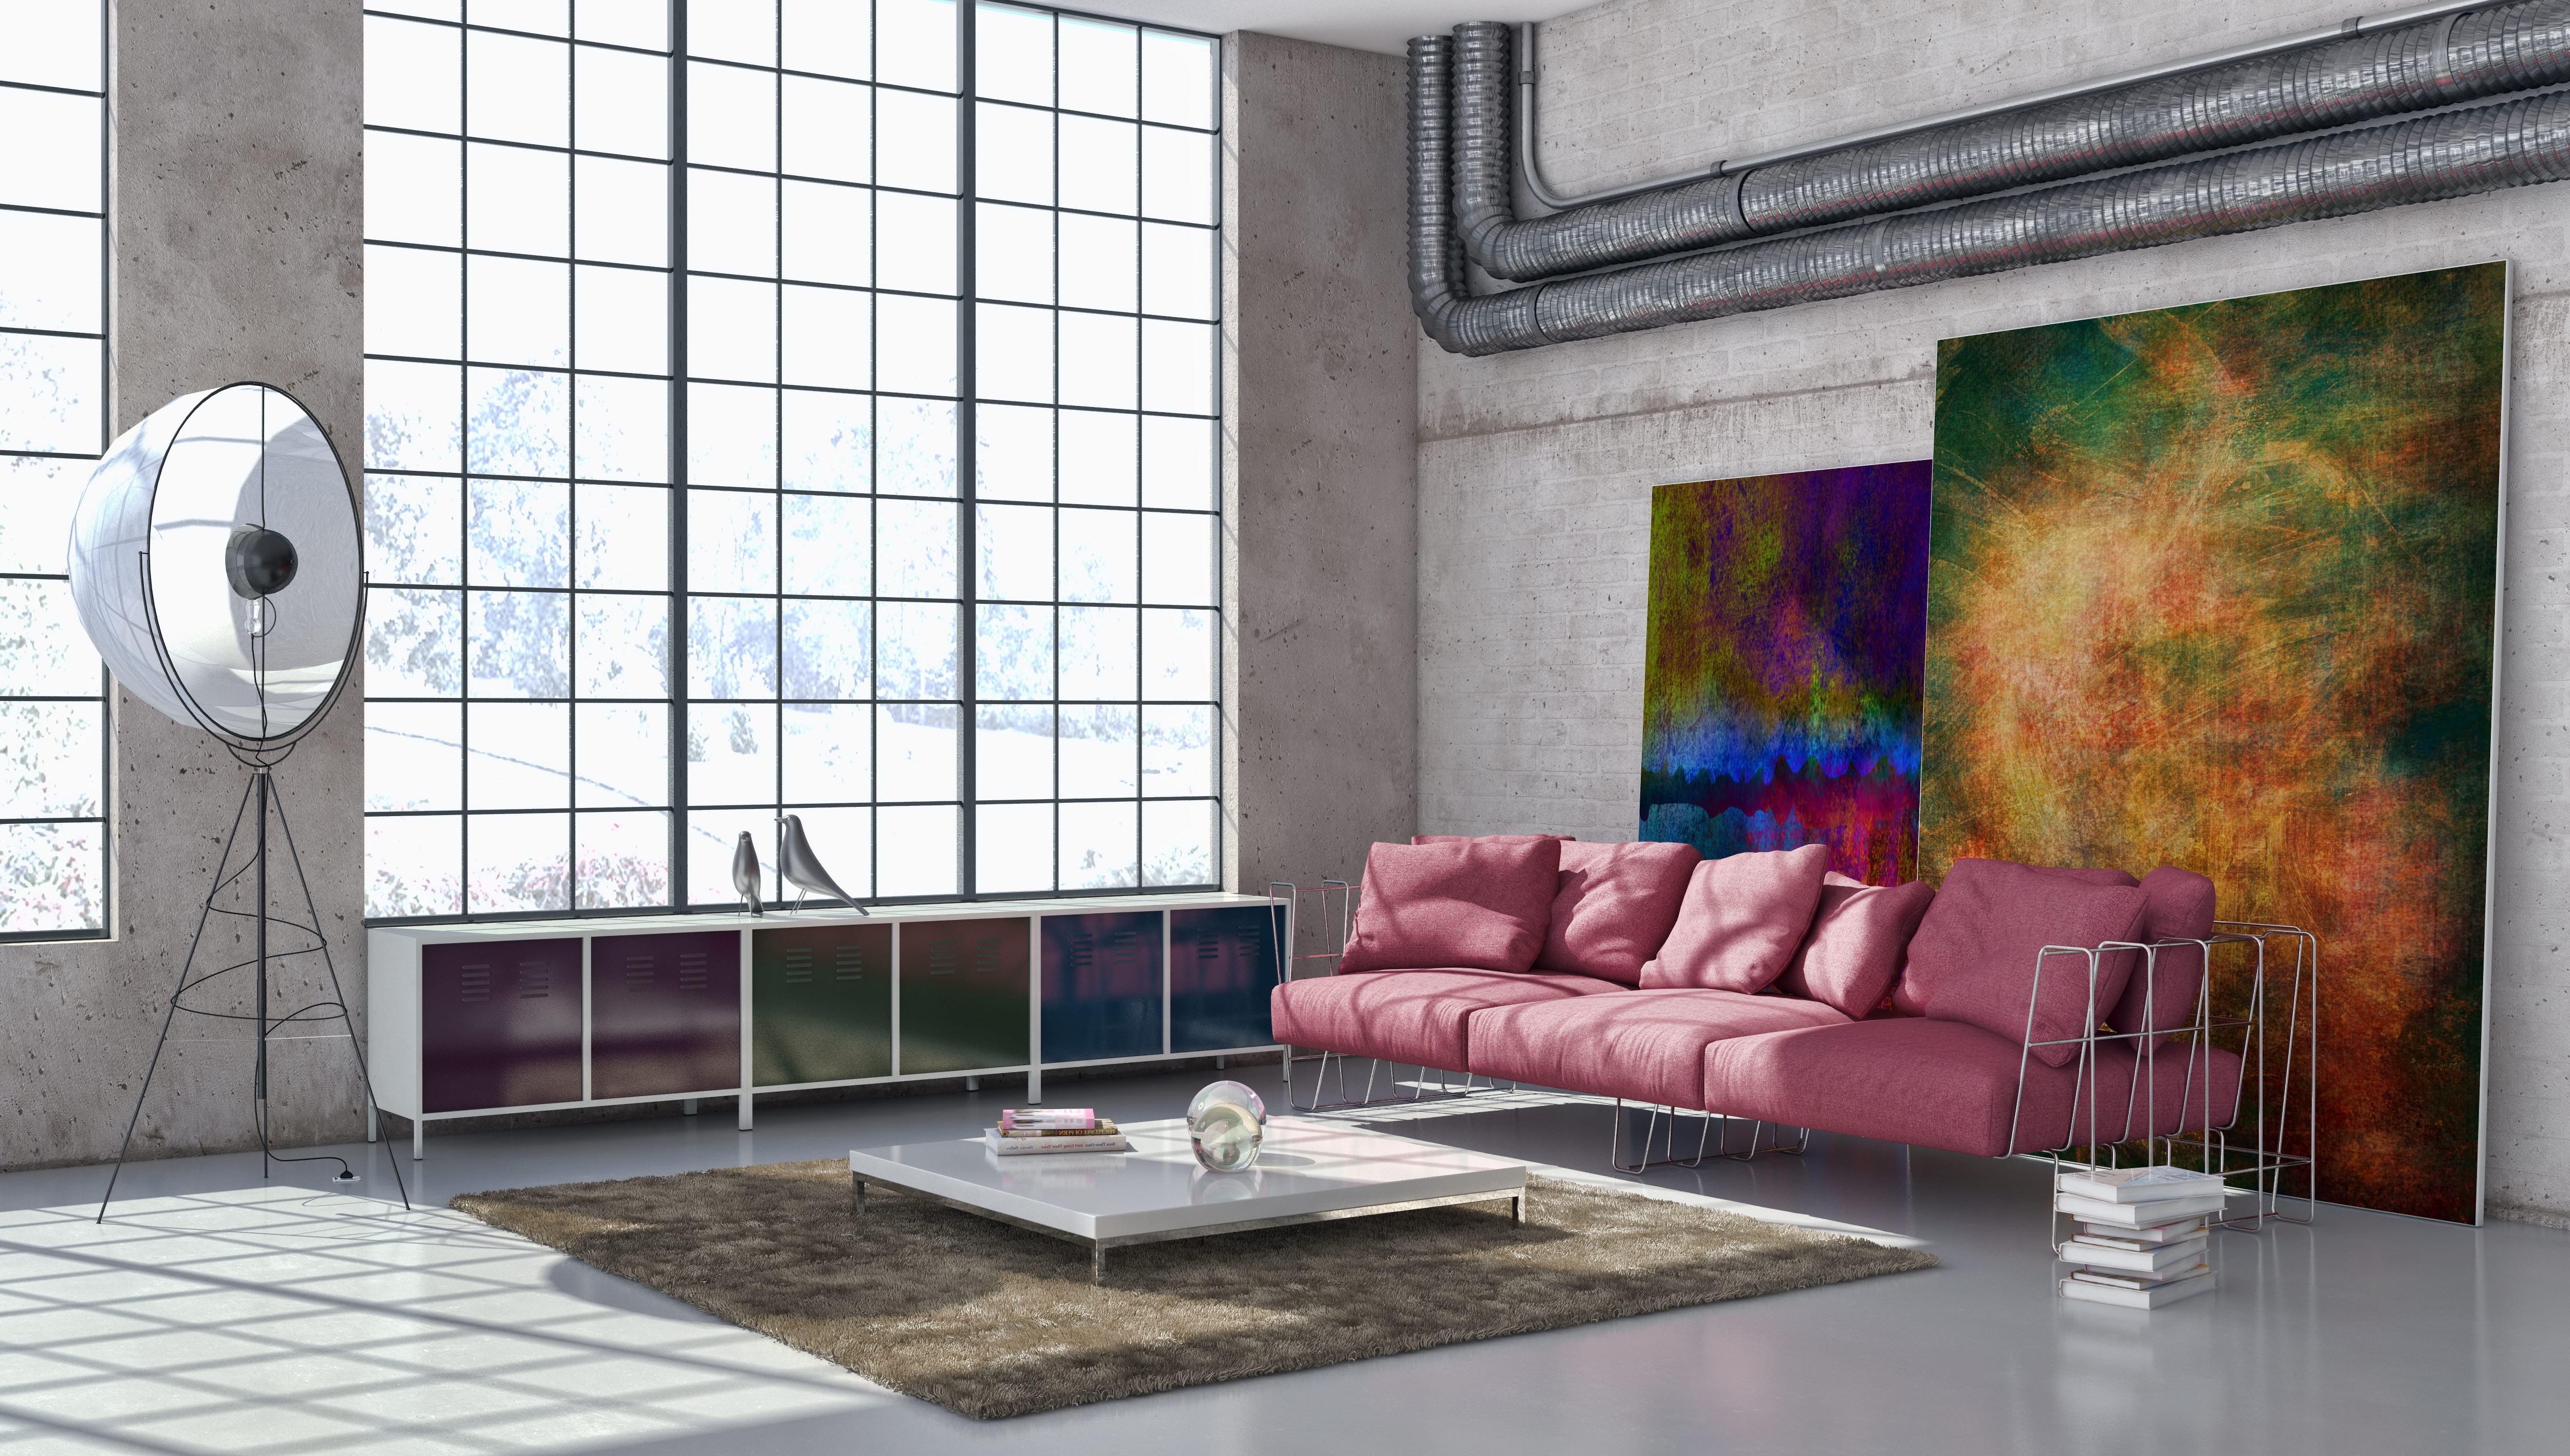 Mobile HD Wallpaper Tubing art, pipes, concrete, furniture